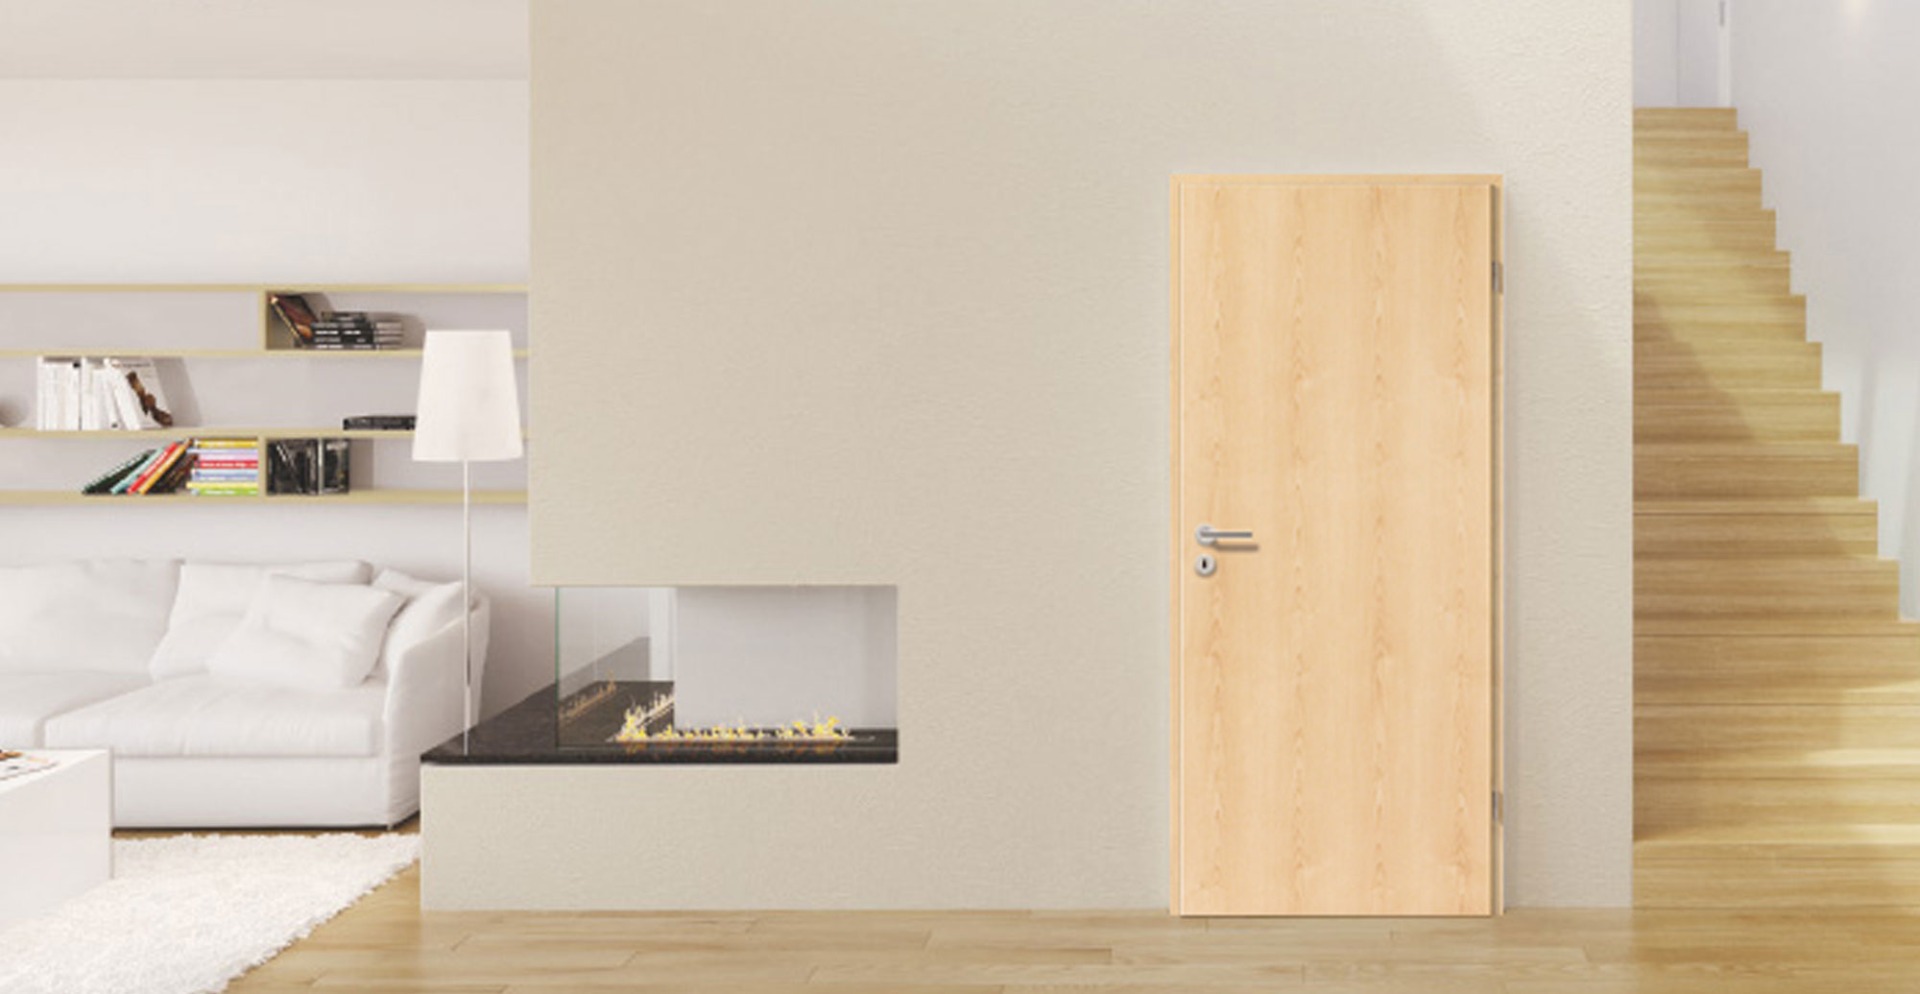 Maple Laminate Doors - Made to Measure Interior Doors